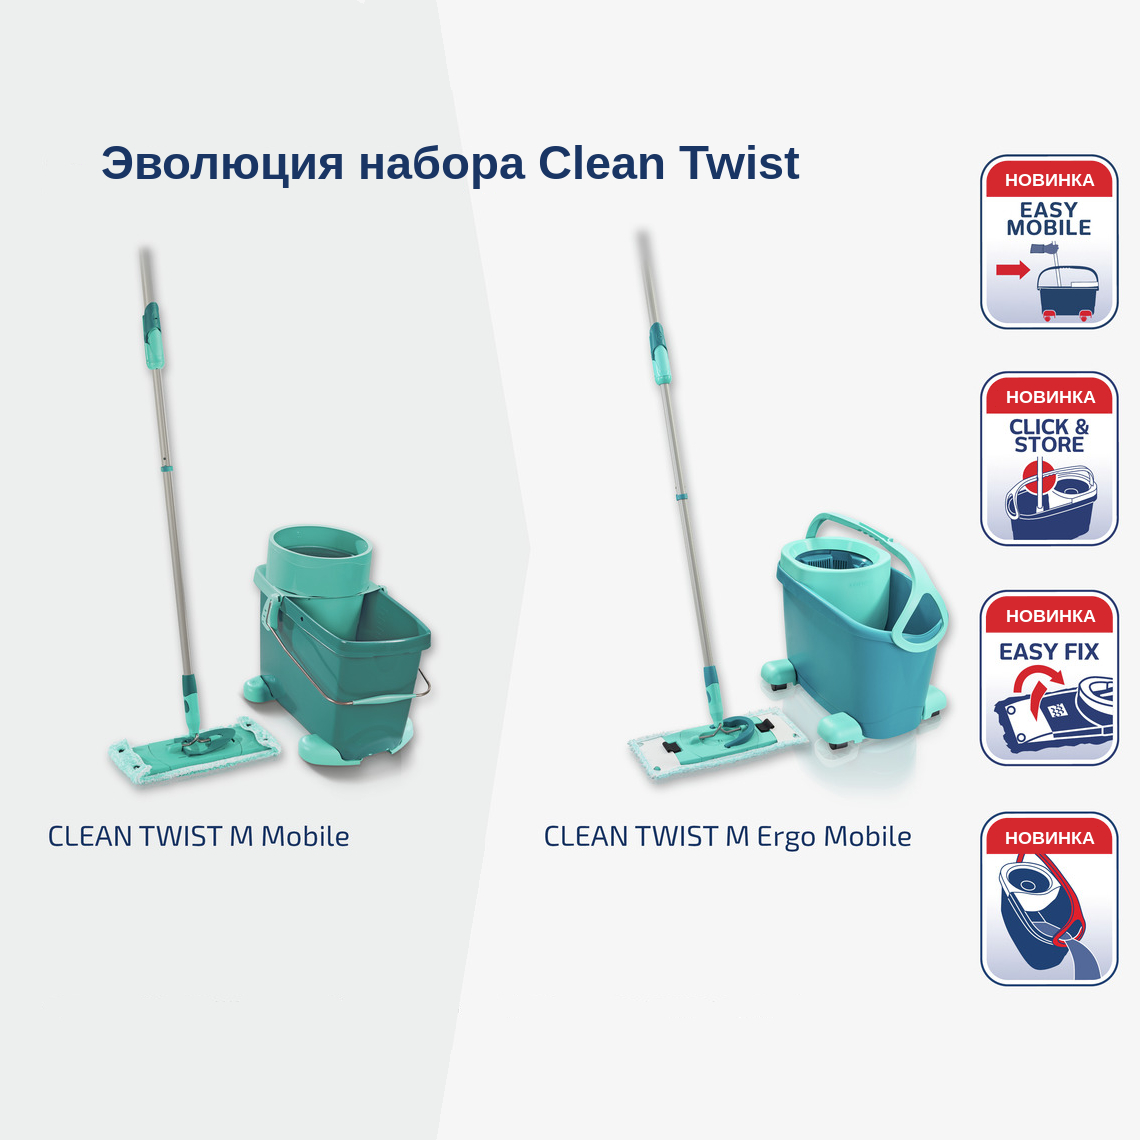    Clean Twist M Ergo Mobile (Leifheit 52121)